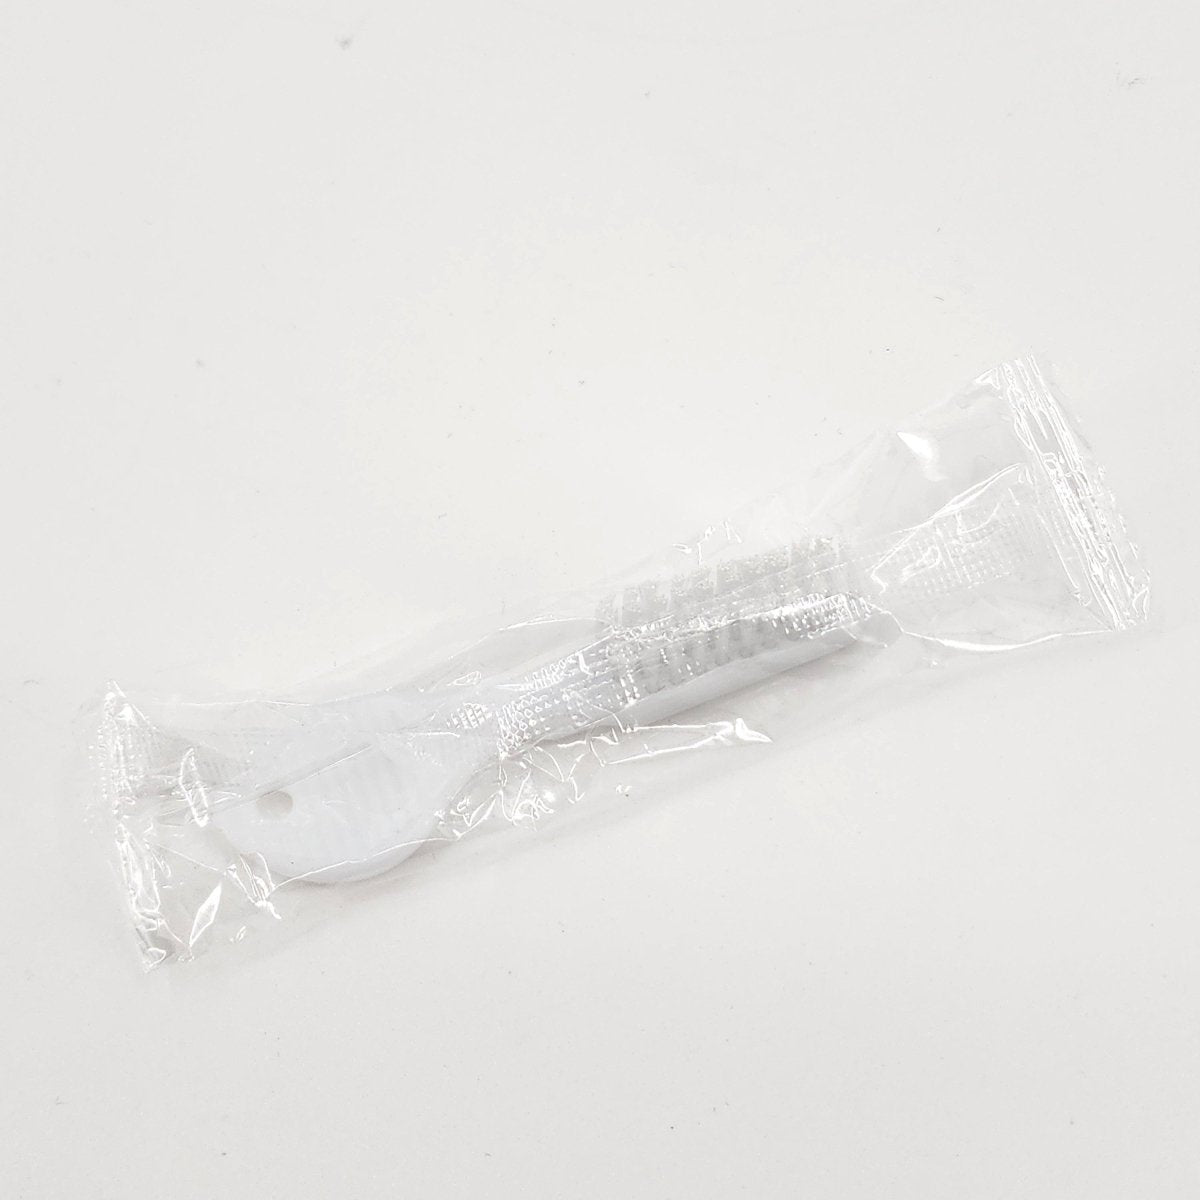 Toothbrush mini or micro half size - Hilltop Packs LLC